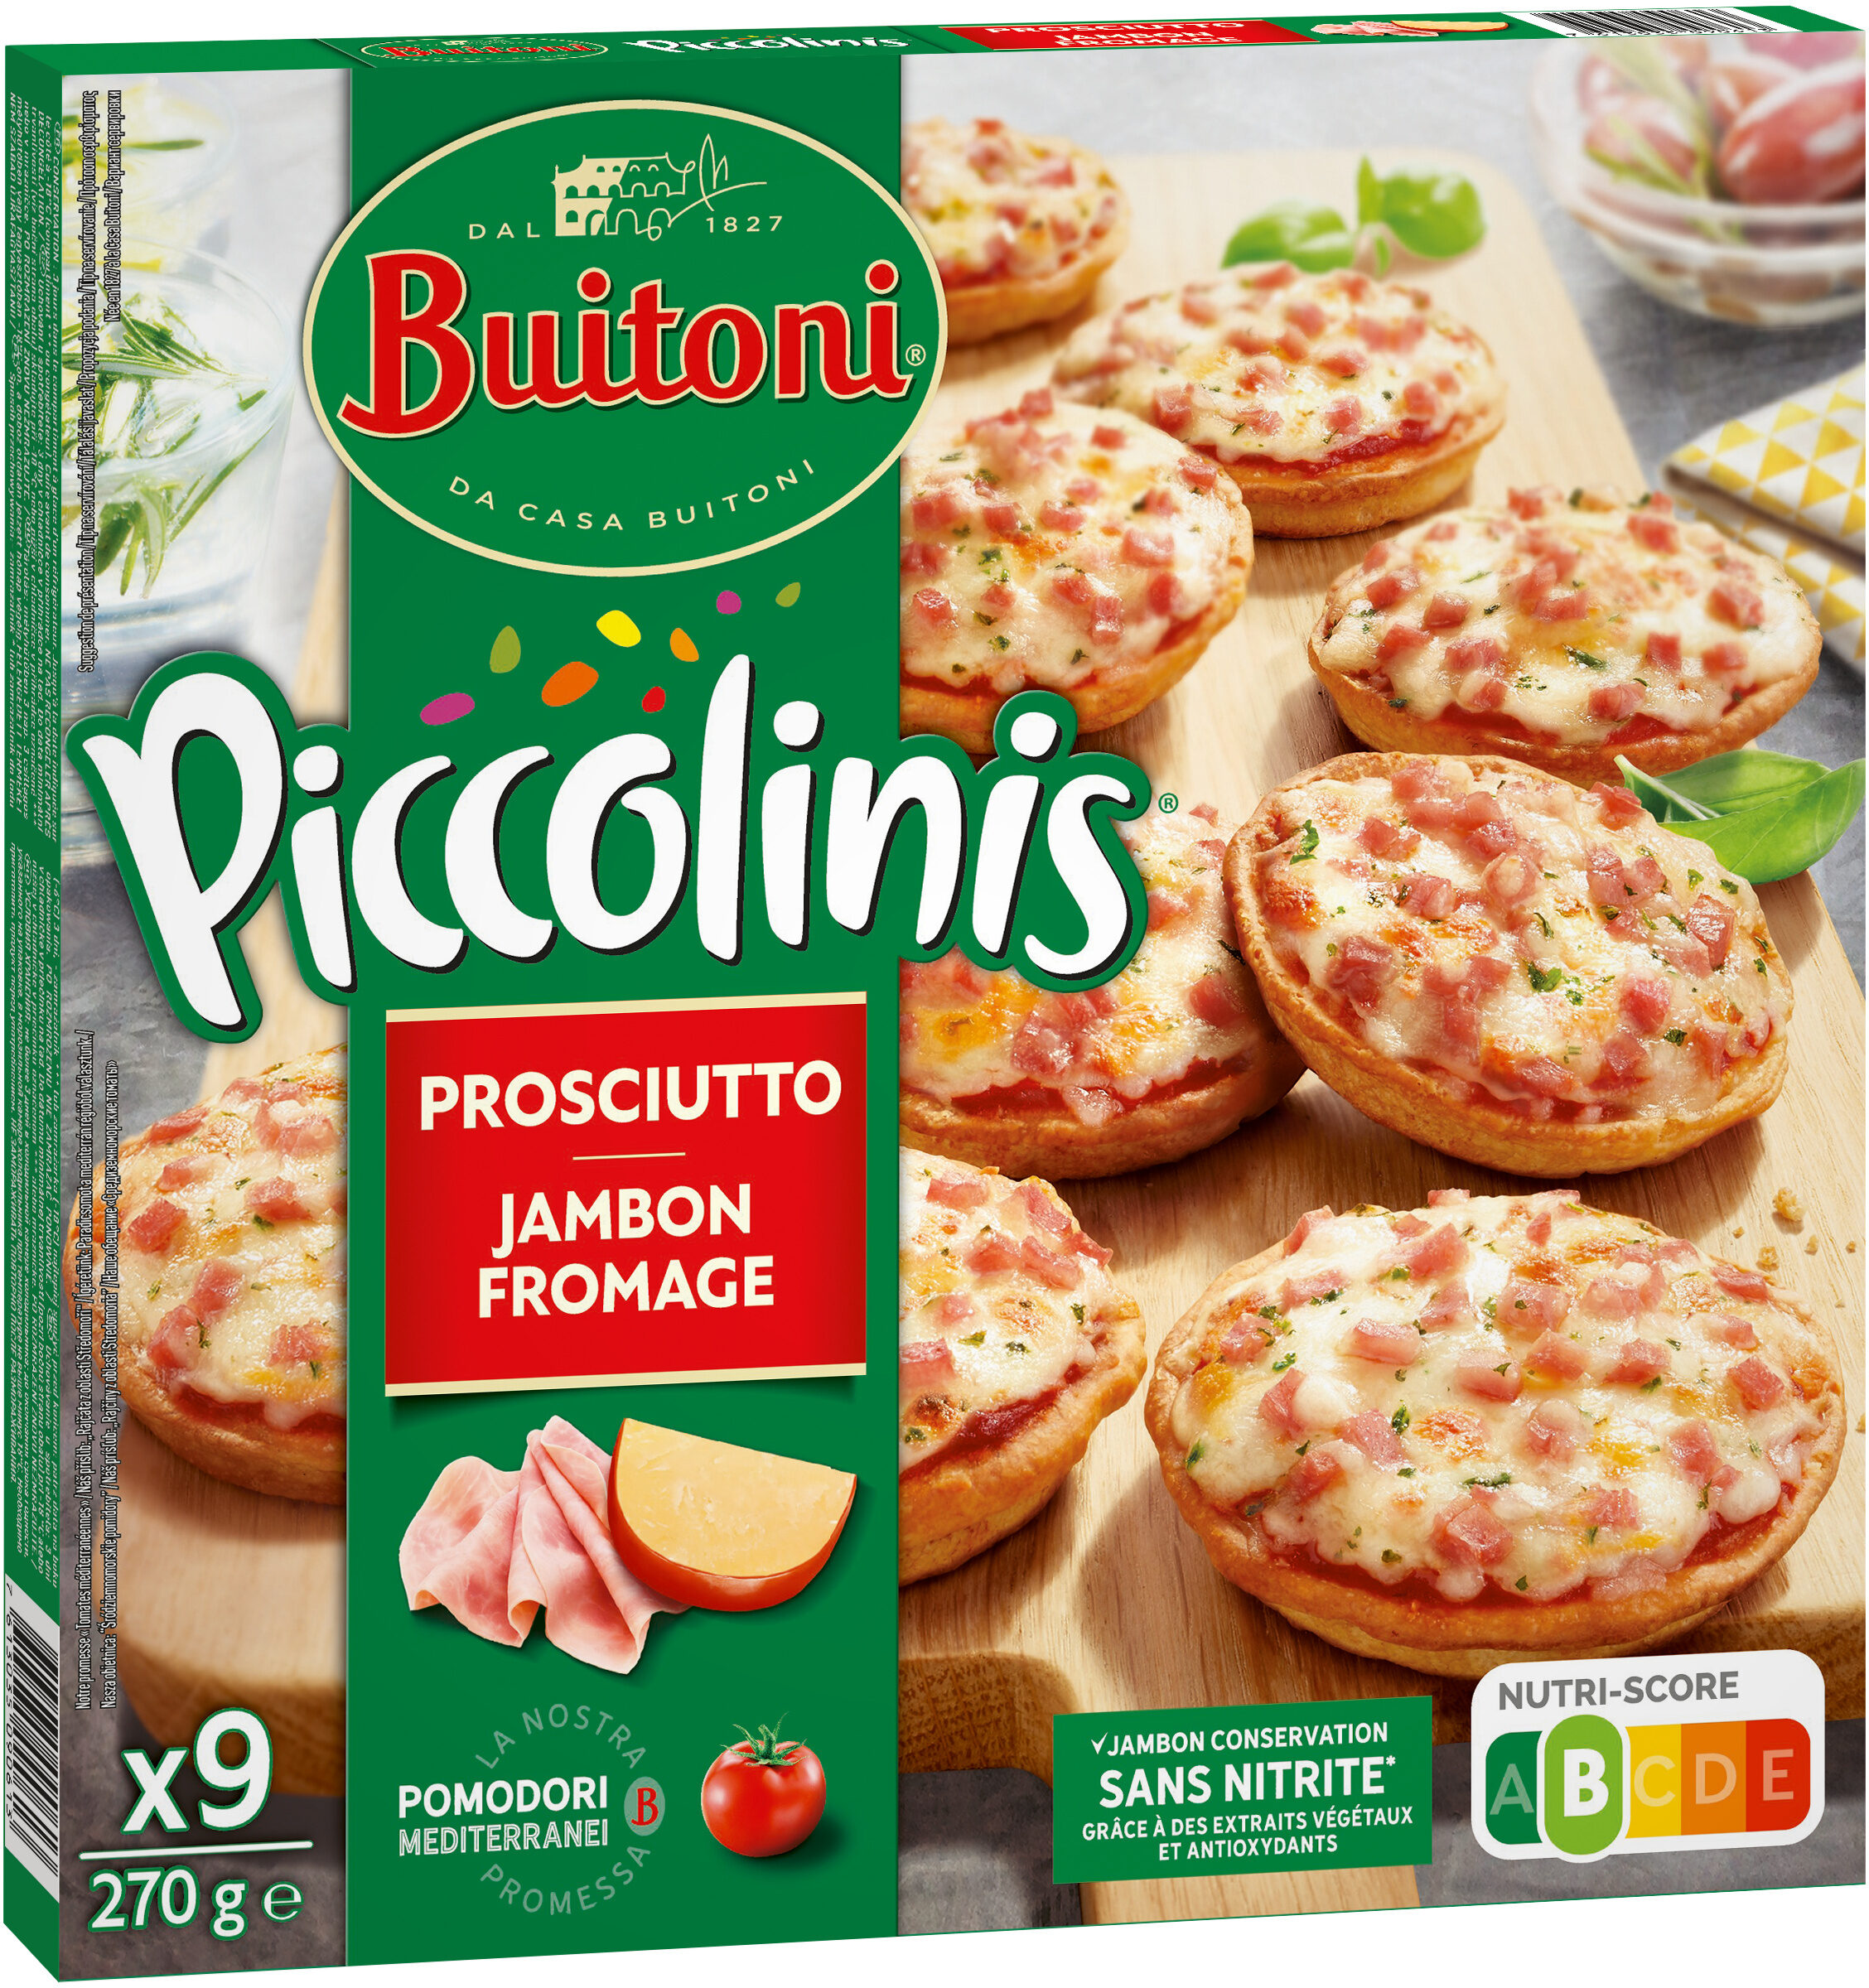 BUITONI PICCOLINIS mini-pizzas surgelées Jambon Fromage 270g - Product - fr